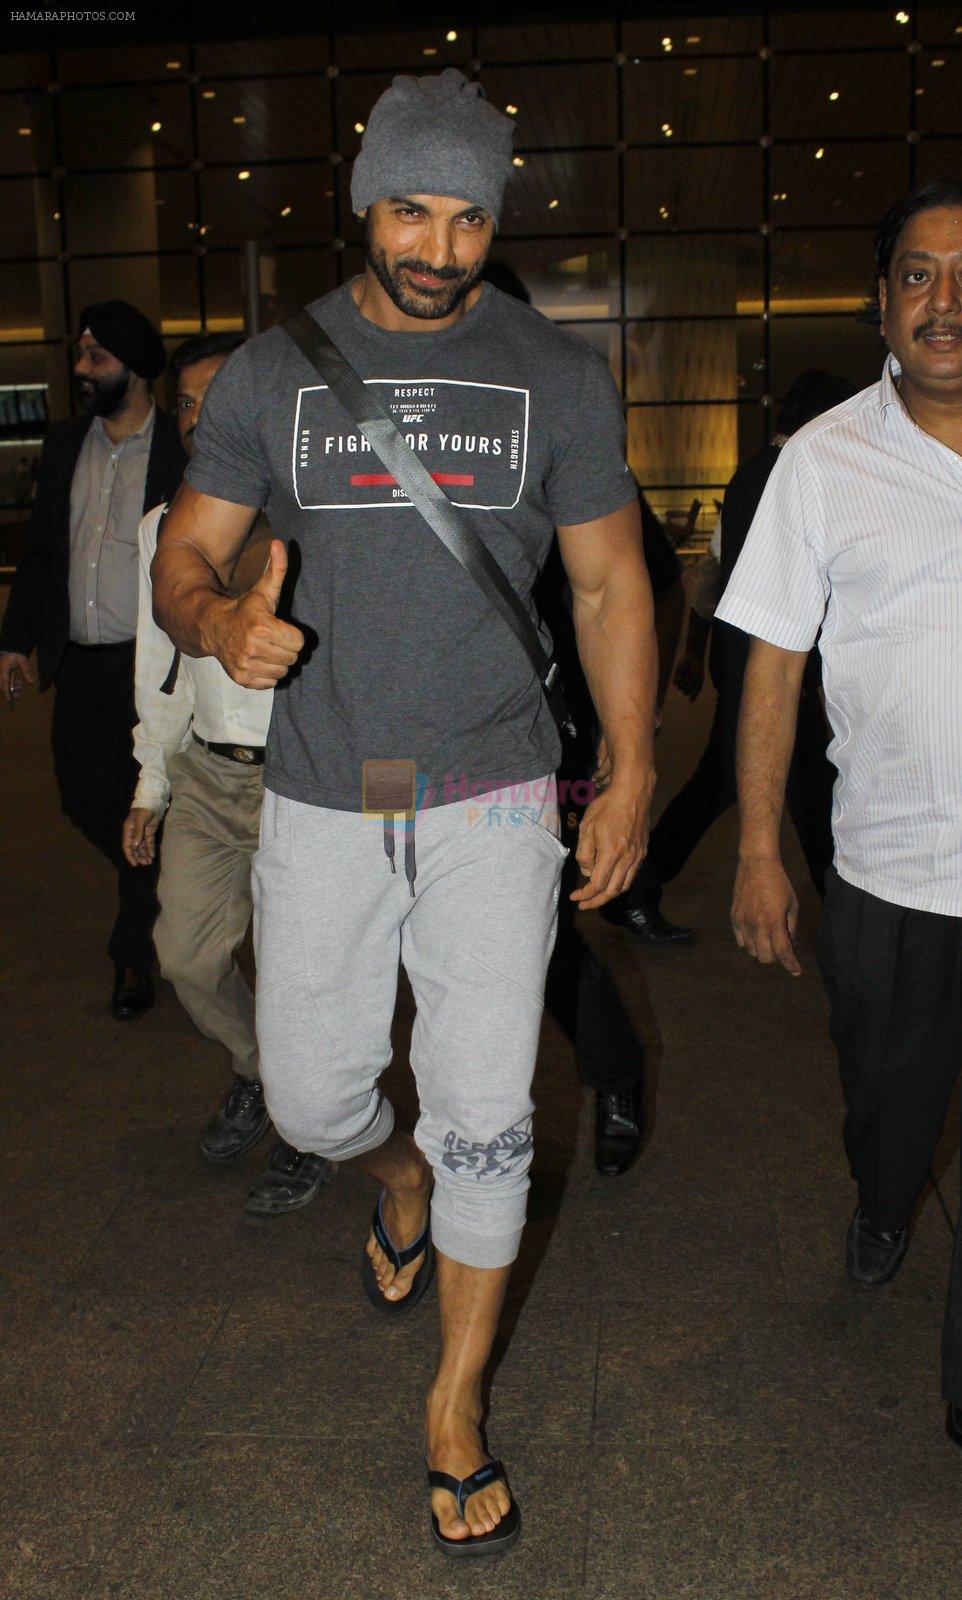 John Abraham snapped at airport in Mumbai on 20th June 2016